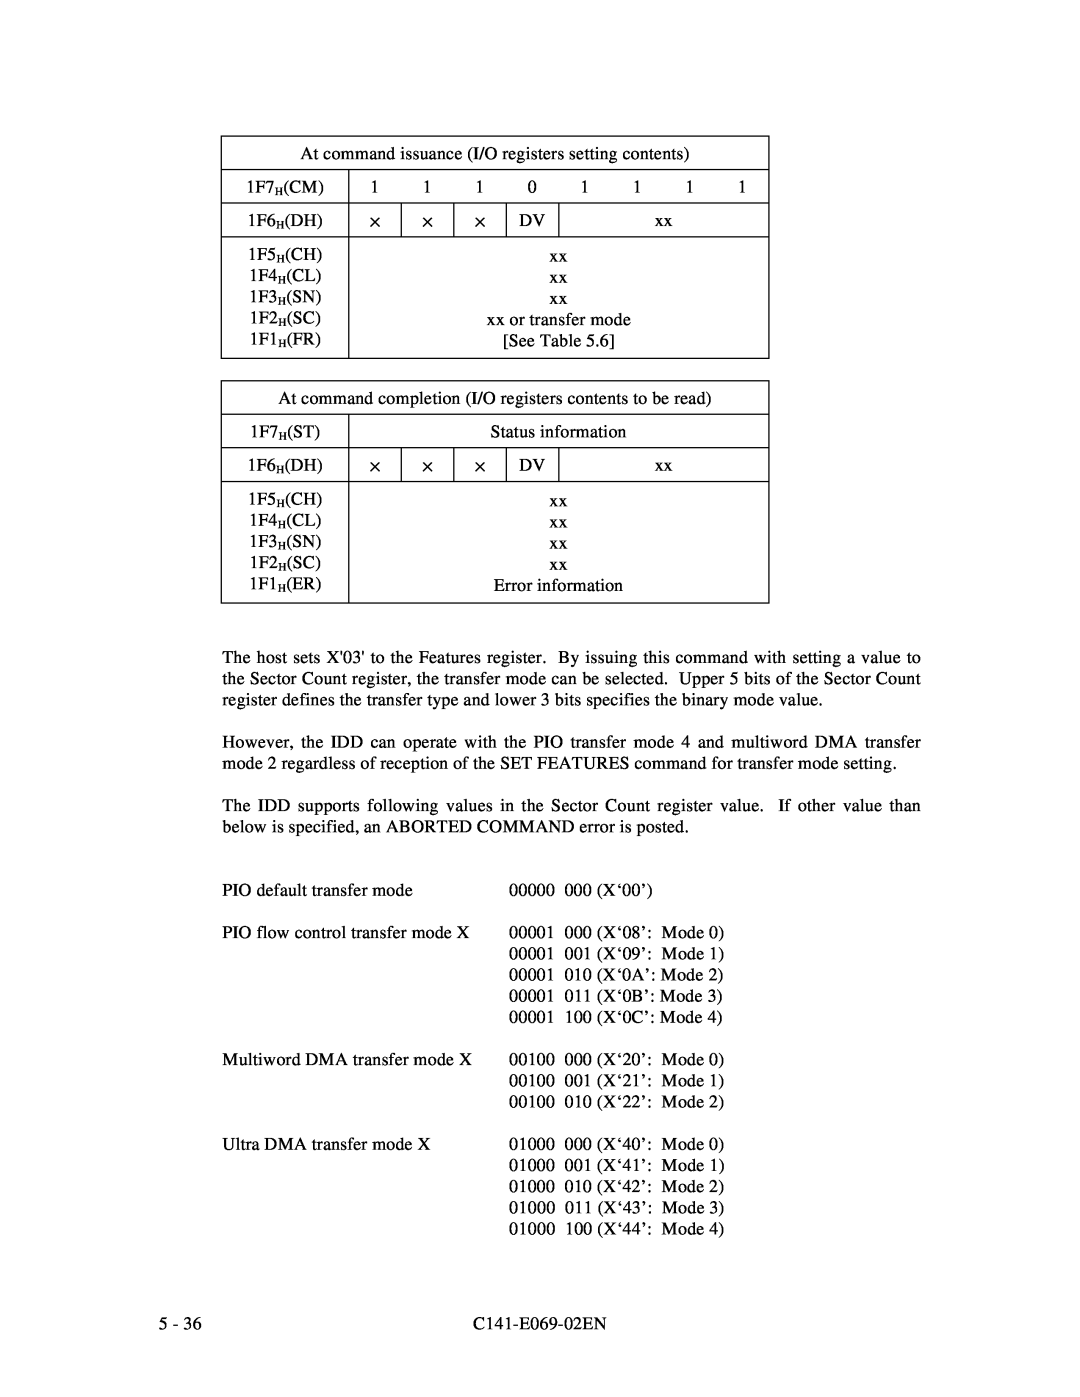 Fujitsu MPD3XXXAT manual At command issuance I/O registers setting contents, 1F7HCM, 1F6HDH, 1F5HCH, 1F4HCL, 1F3HSN, 1F2HSC 